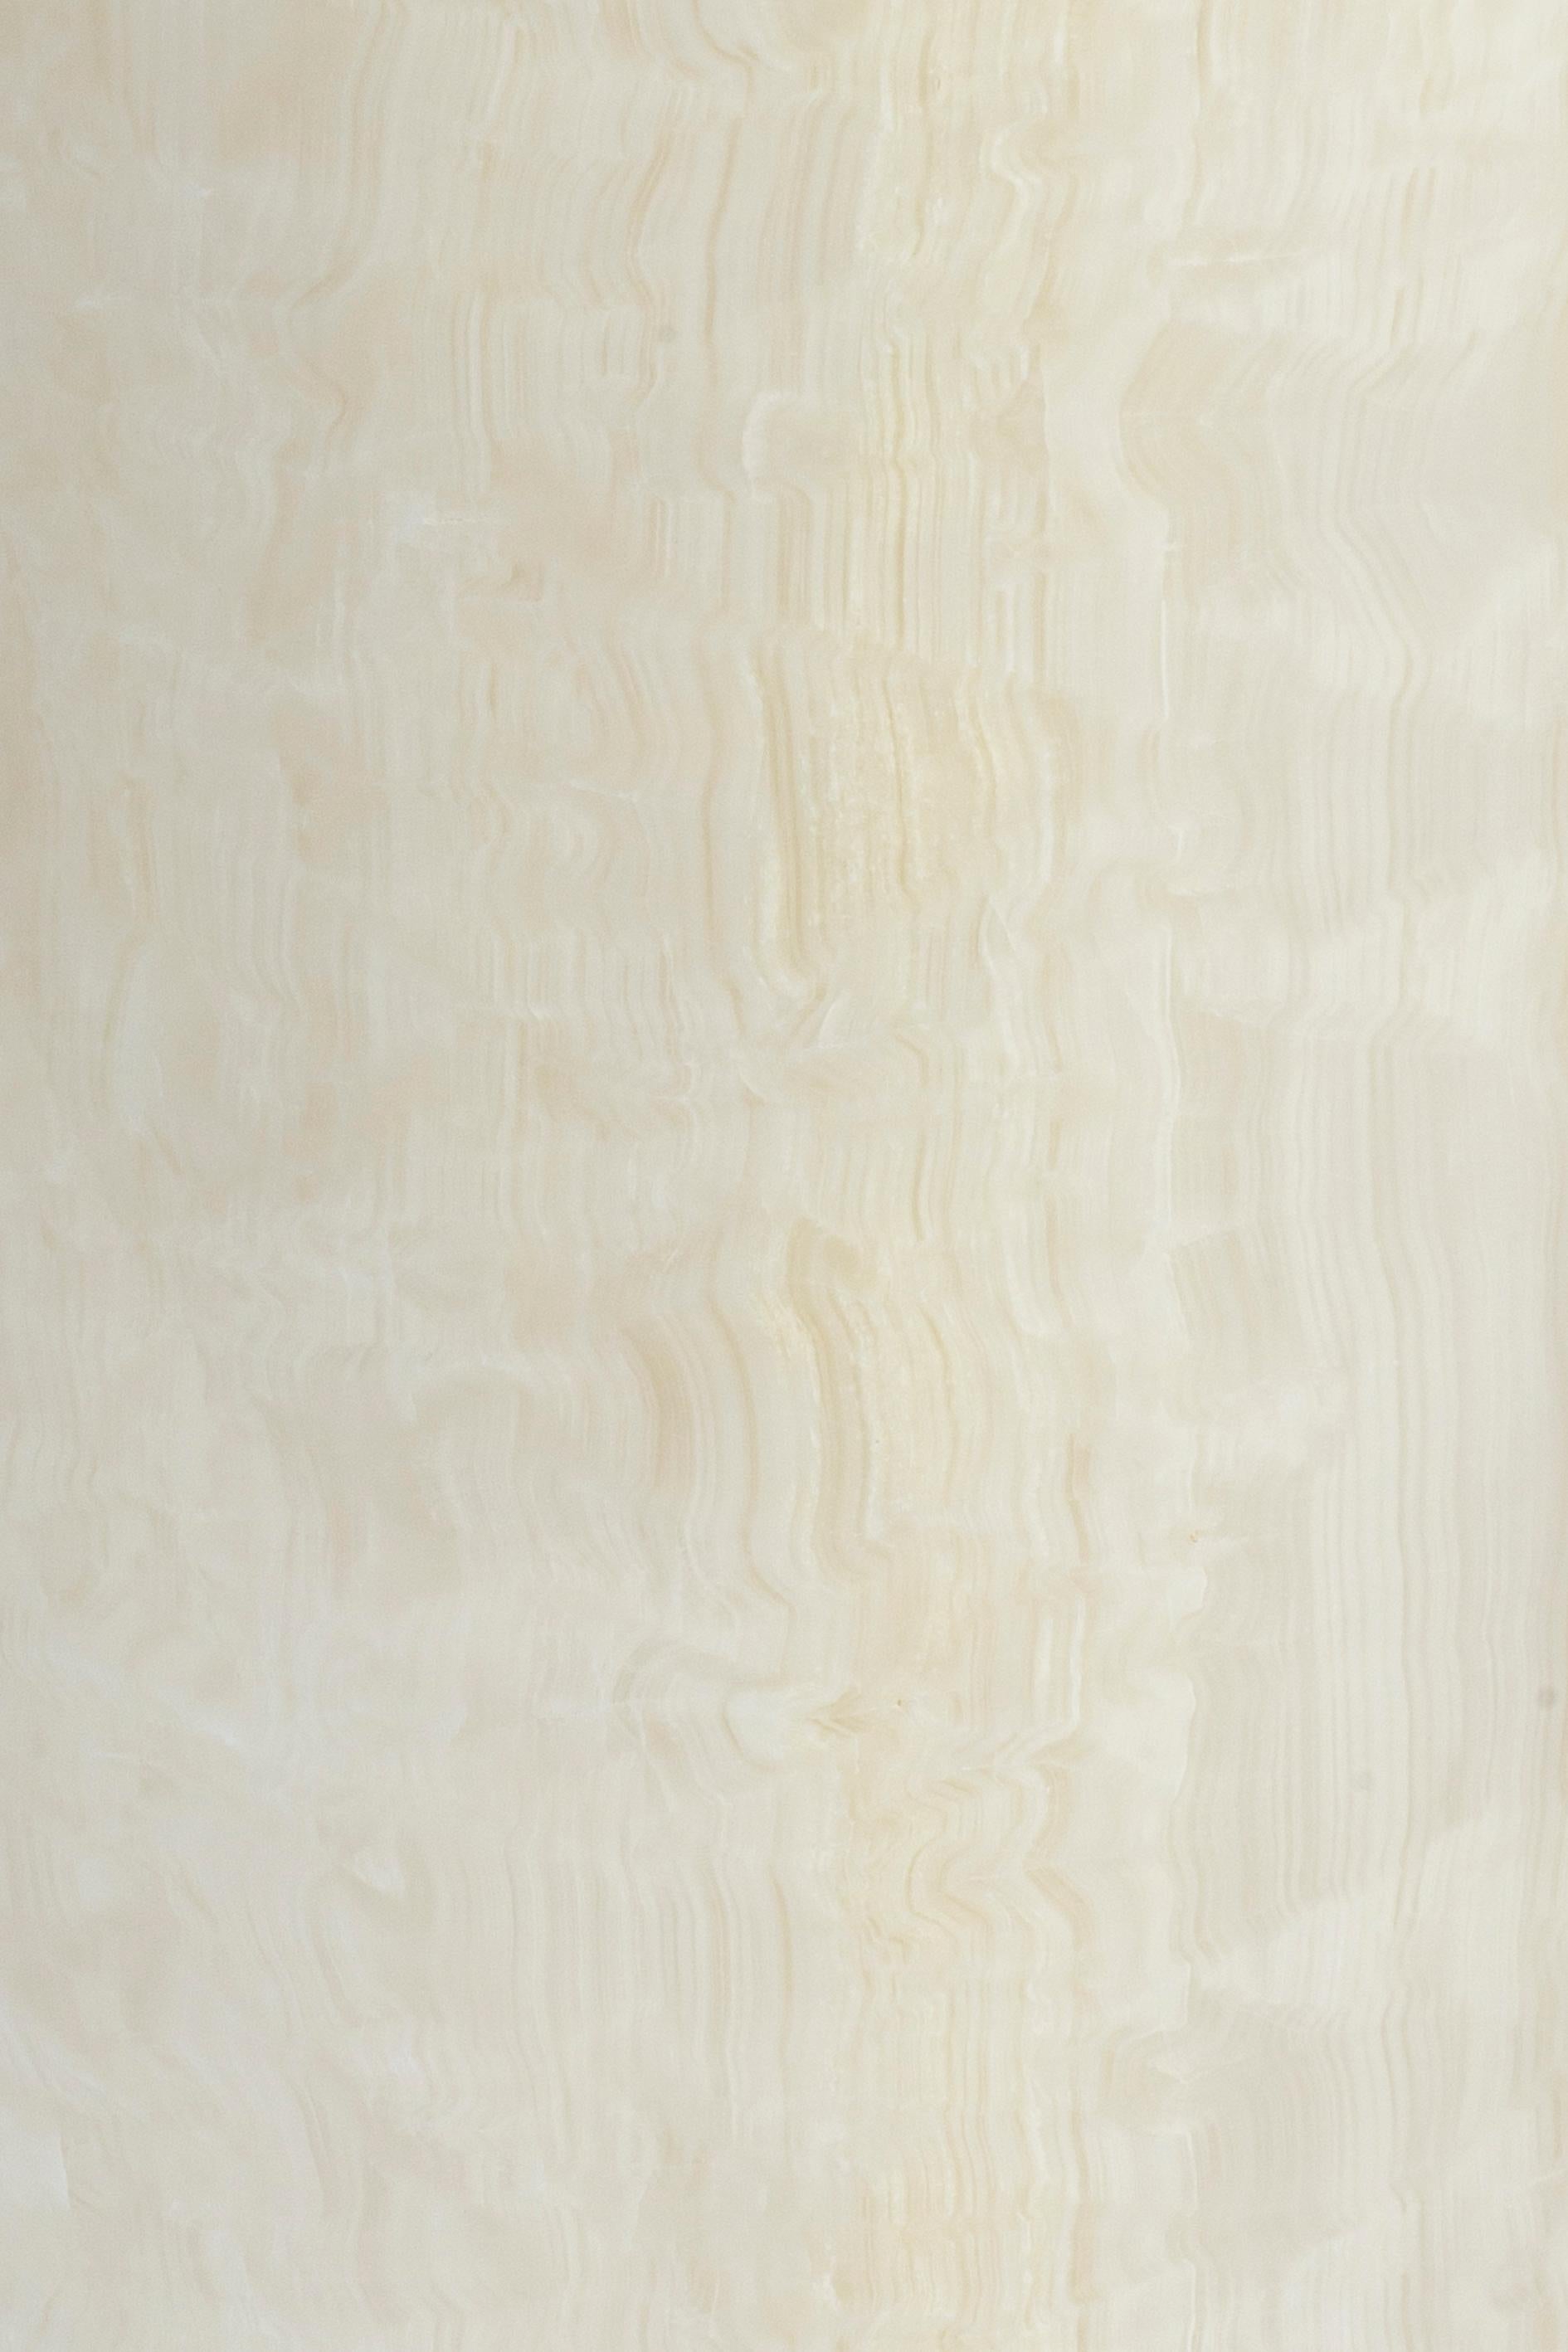 New Modern Side Table in White Onyx, creator Karen Chekerdjian In New Condition For Sale In Milan, IT